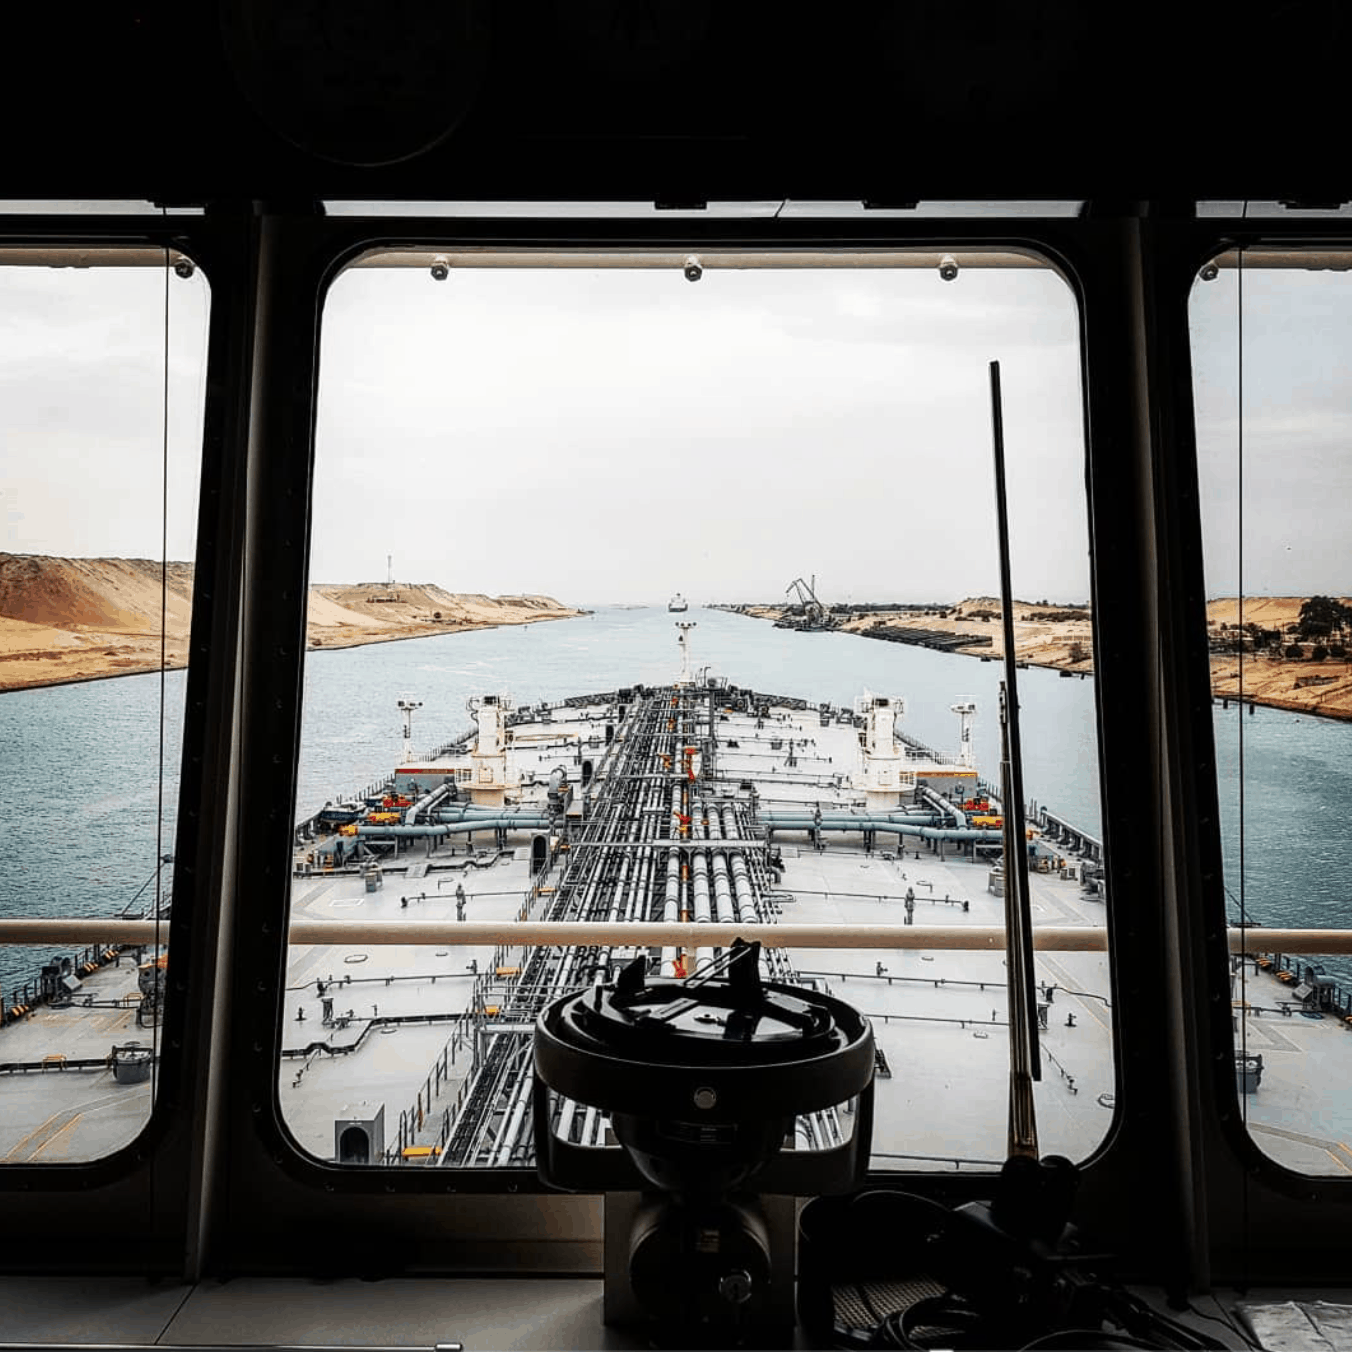 3. Suez Canal. Credits to Gio Ath